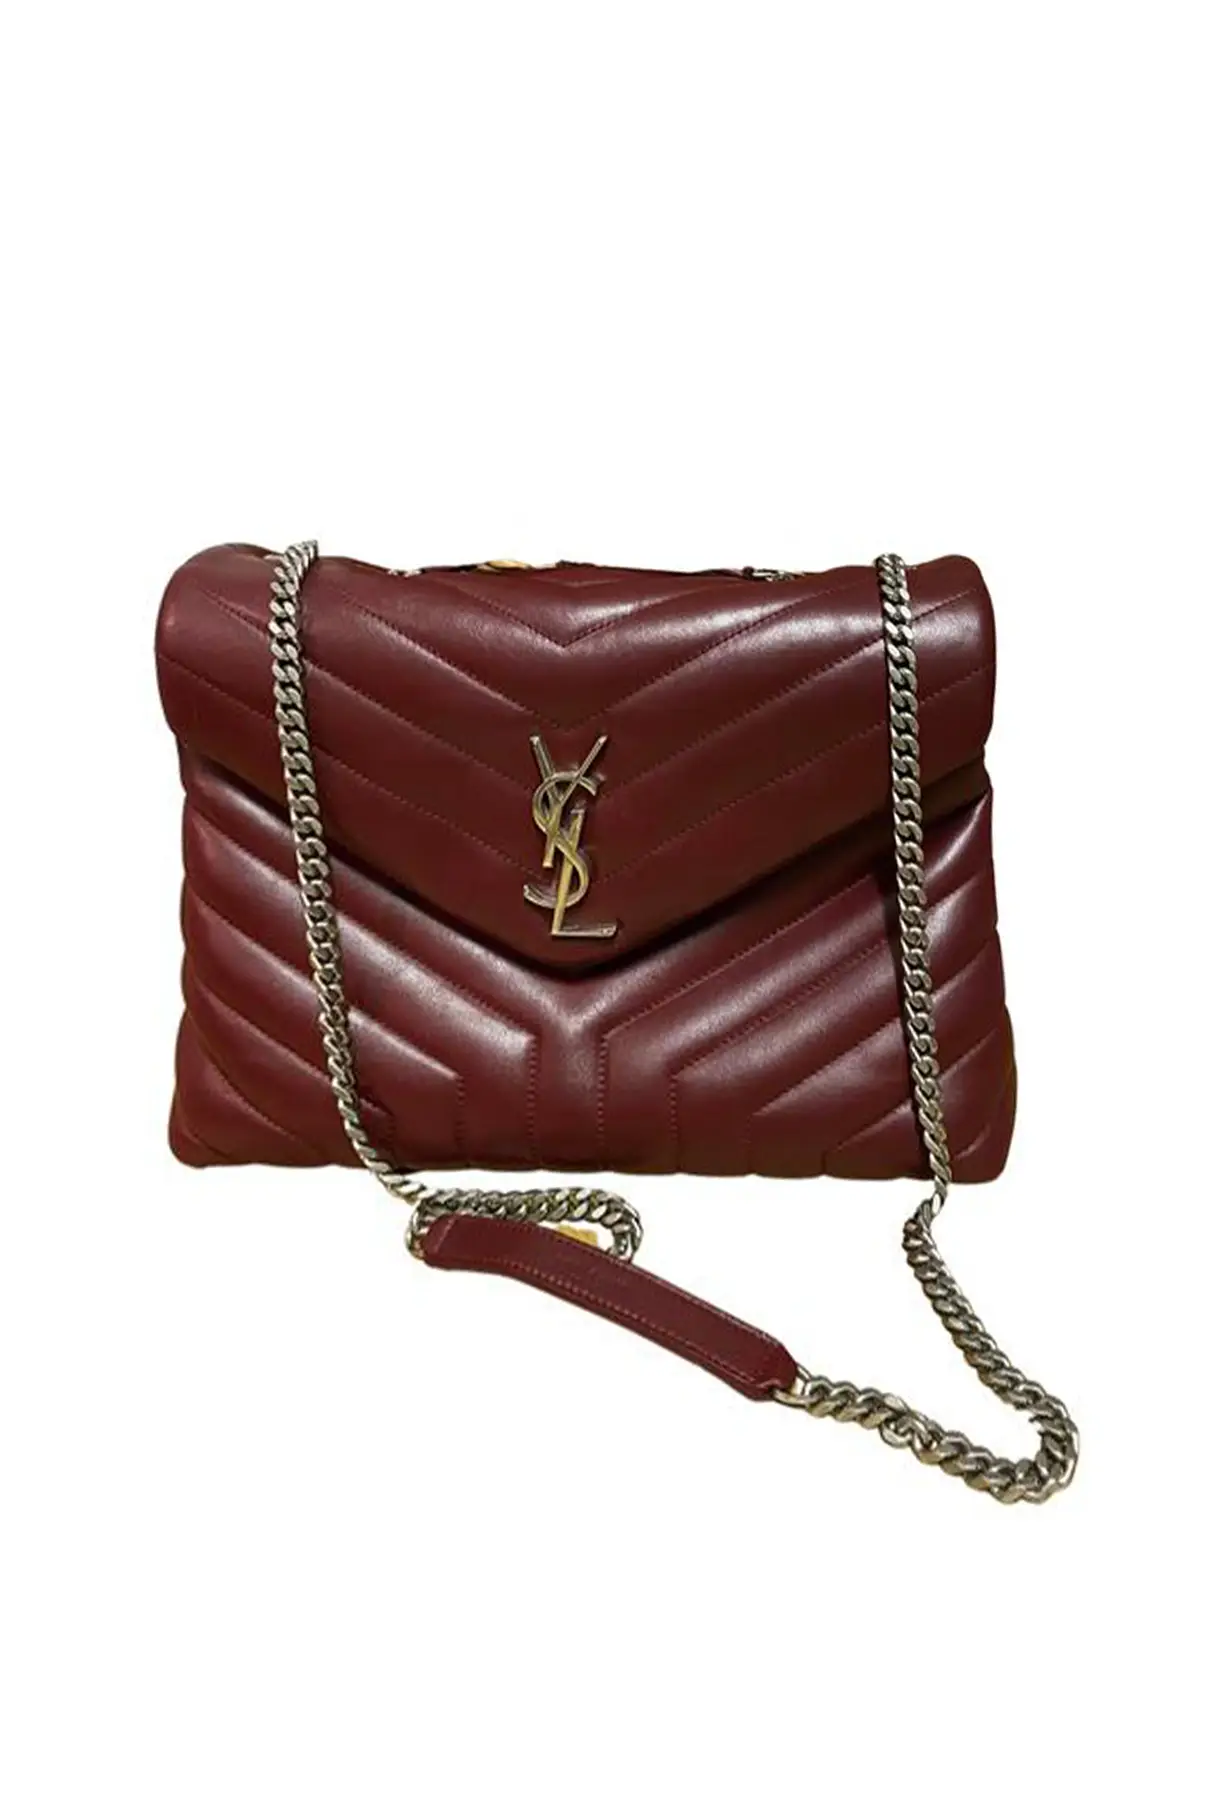 saint-laurent-loulou-handbag-in-burgundy-leather.jpg